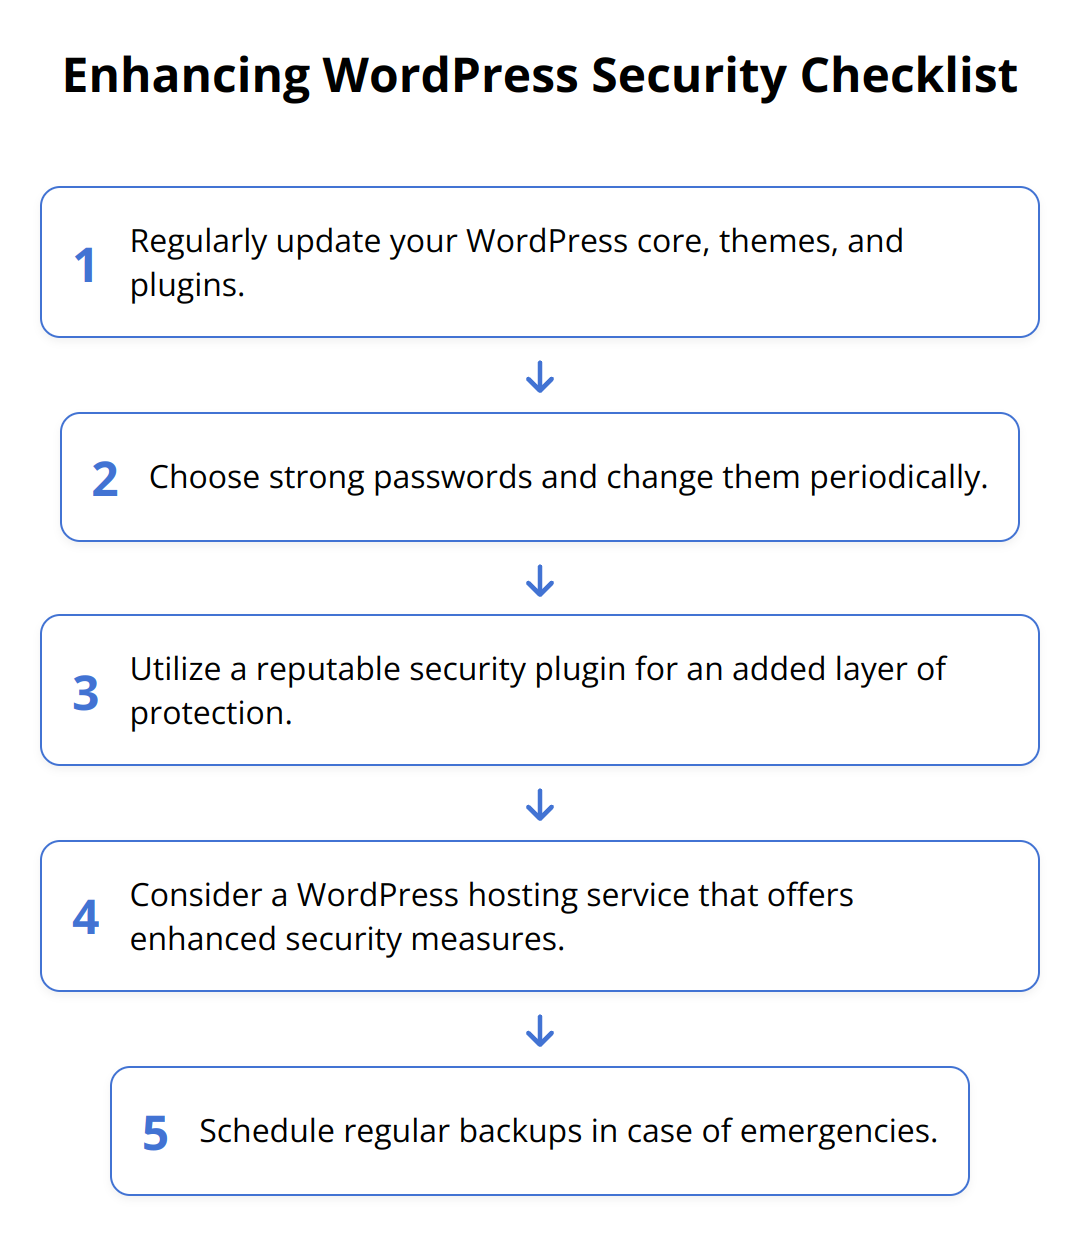 Flow Chart - Enhancing WordPress Security Checklist